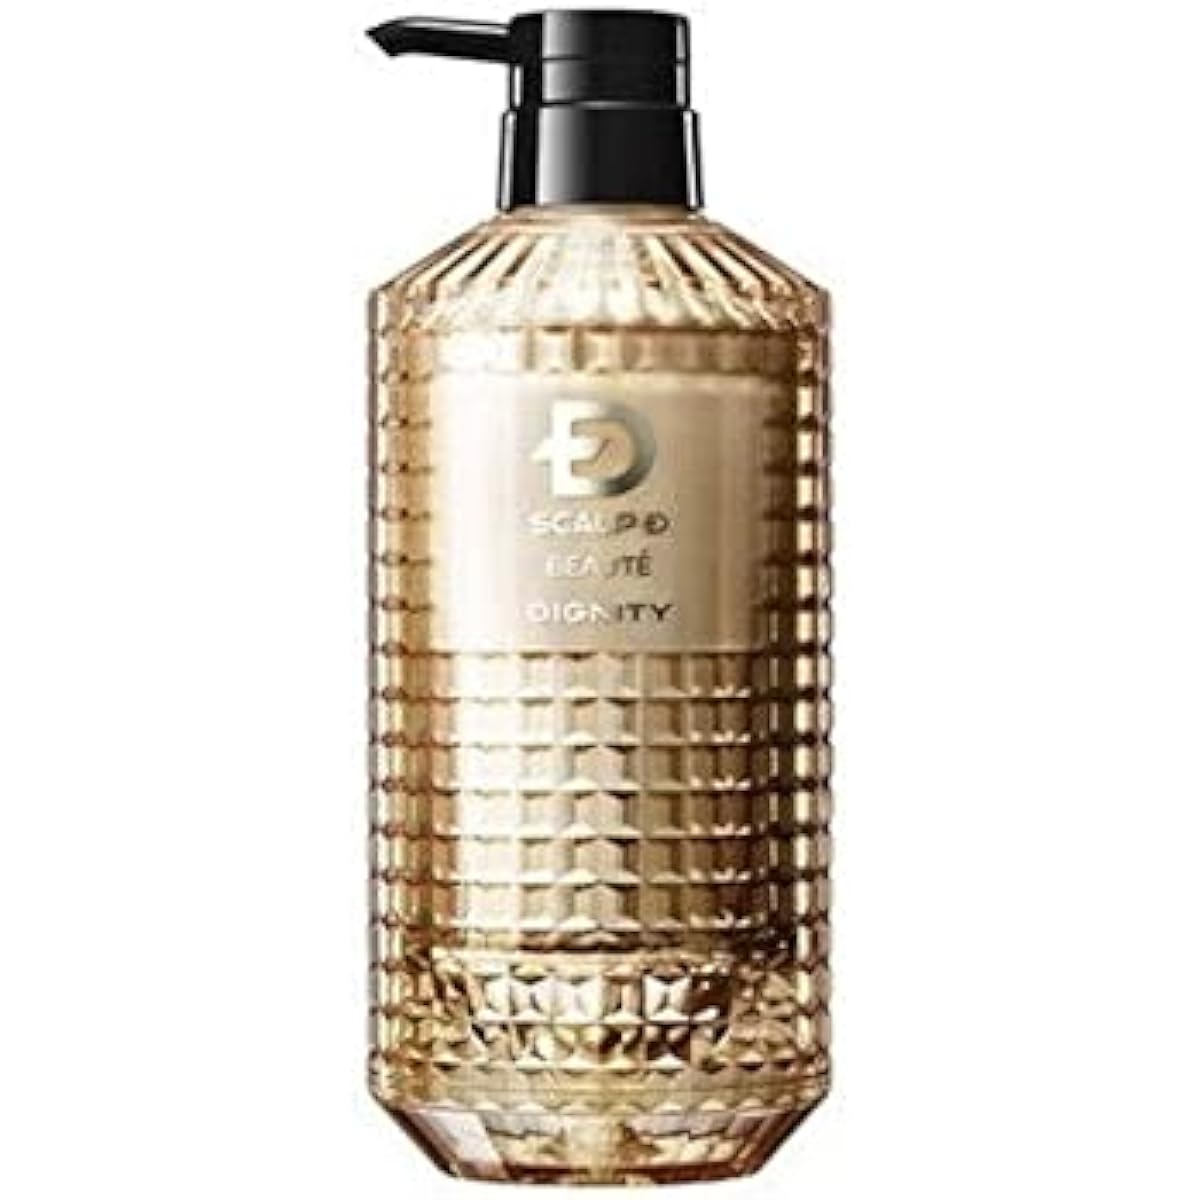 Scalp D Beaute Dignity The Scalp Shampoo for Women Top Line [Dandruff/Itch/Amino Acid/Non-Silicone/Paraben/Sulfate Free] 350ml